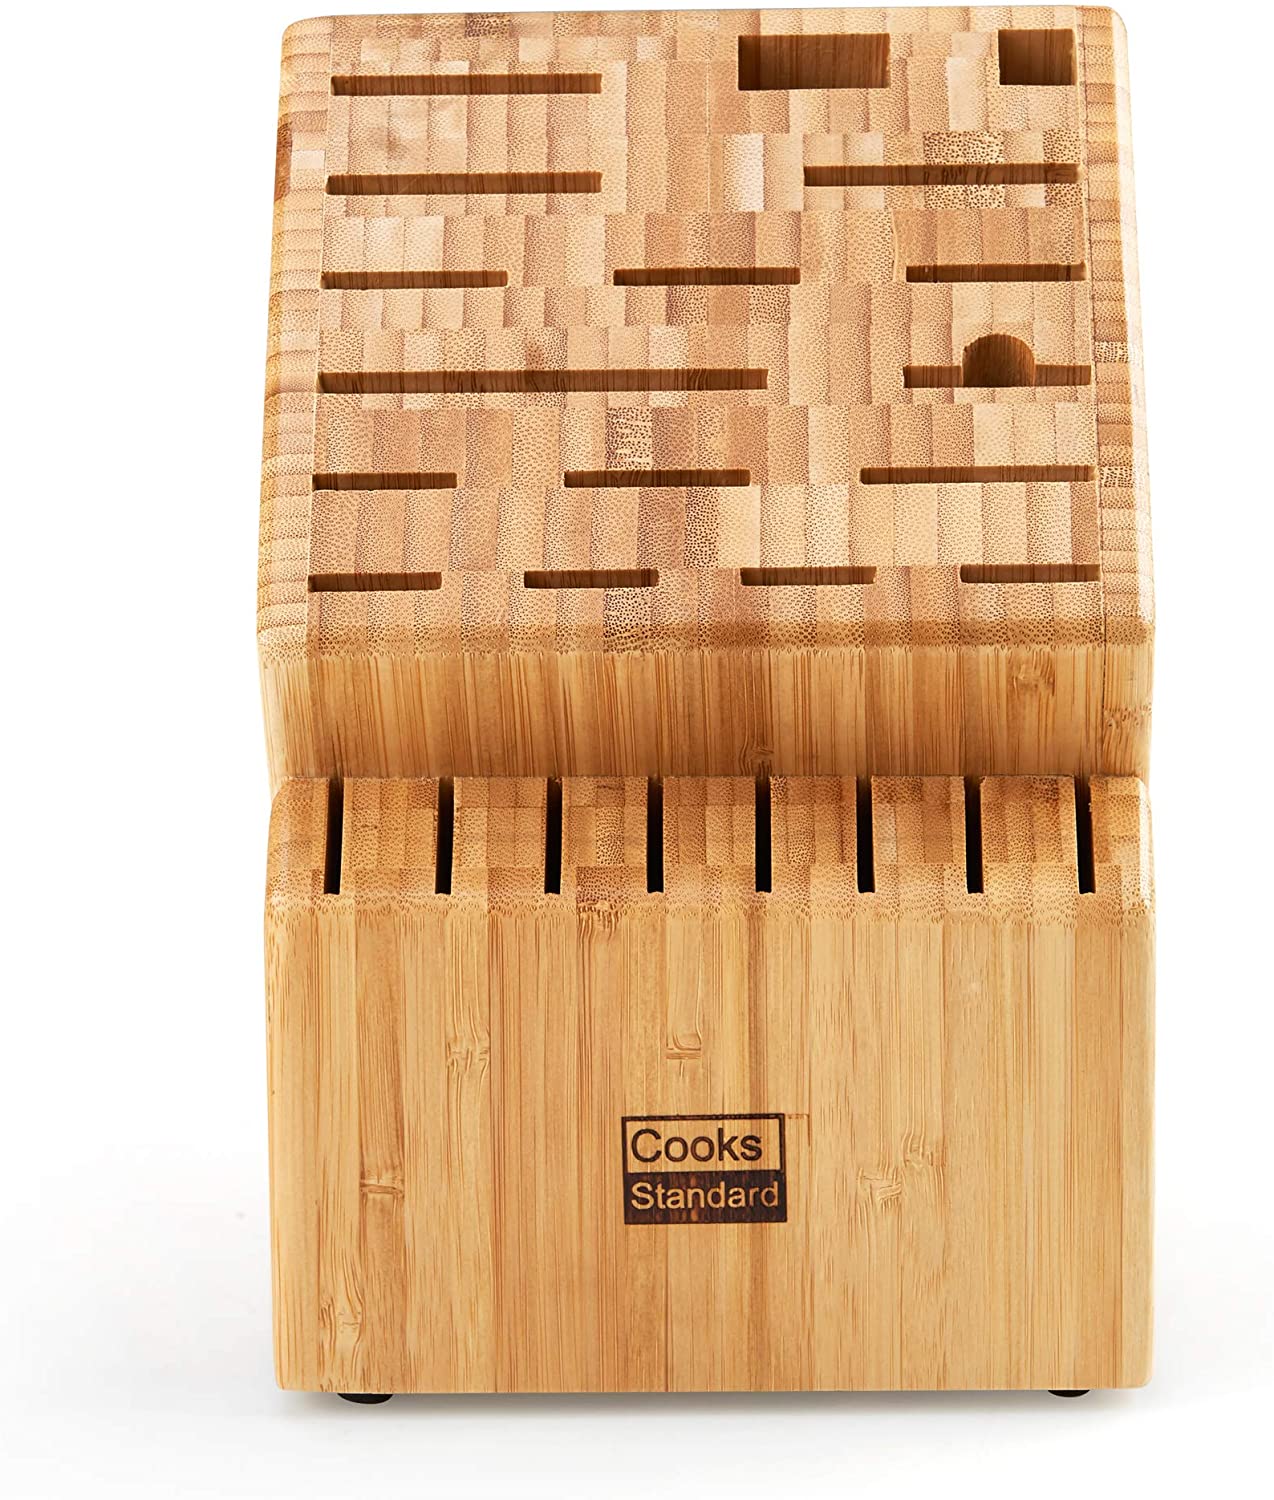 Cooks Standard Bamboo Knife Block Holder without Knives, 25 Slot X-Lar